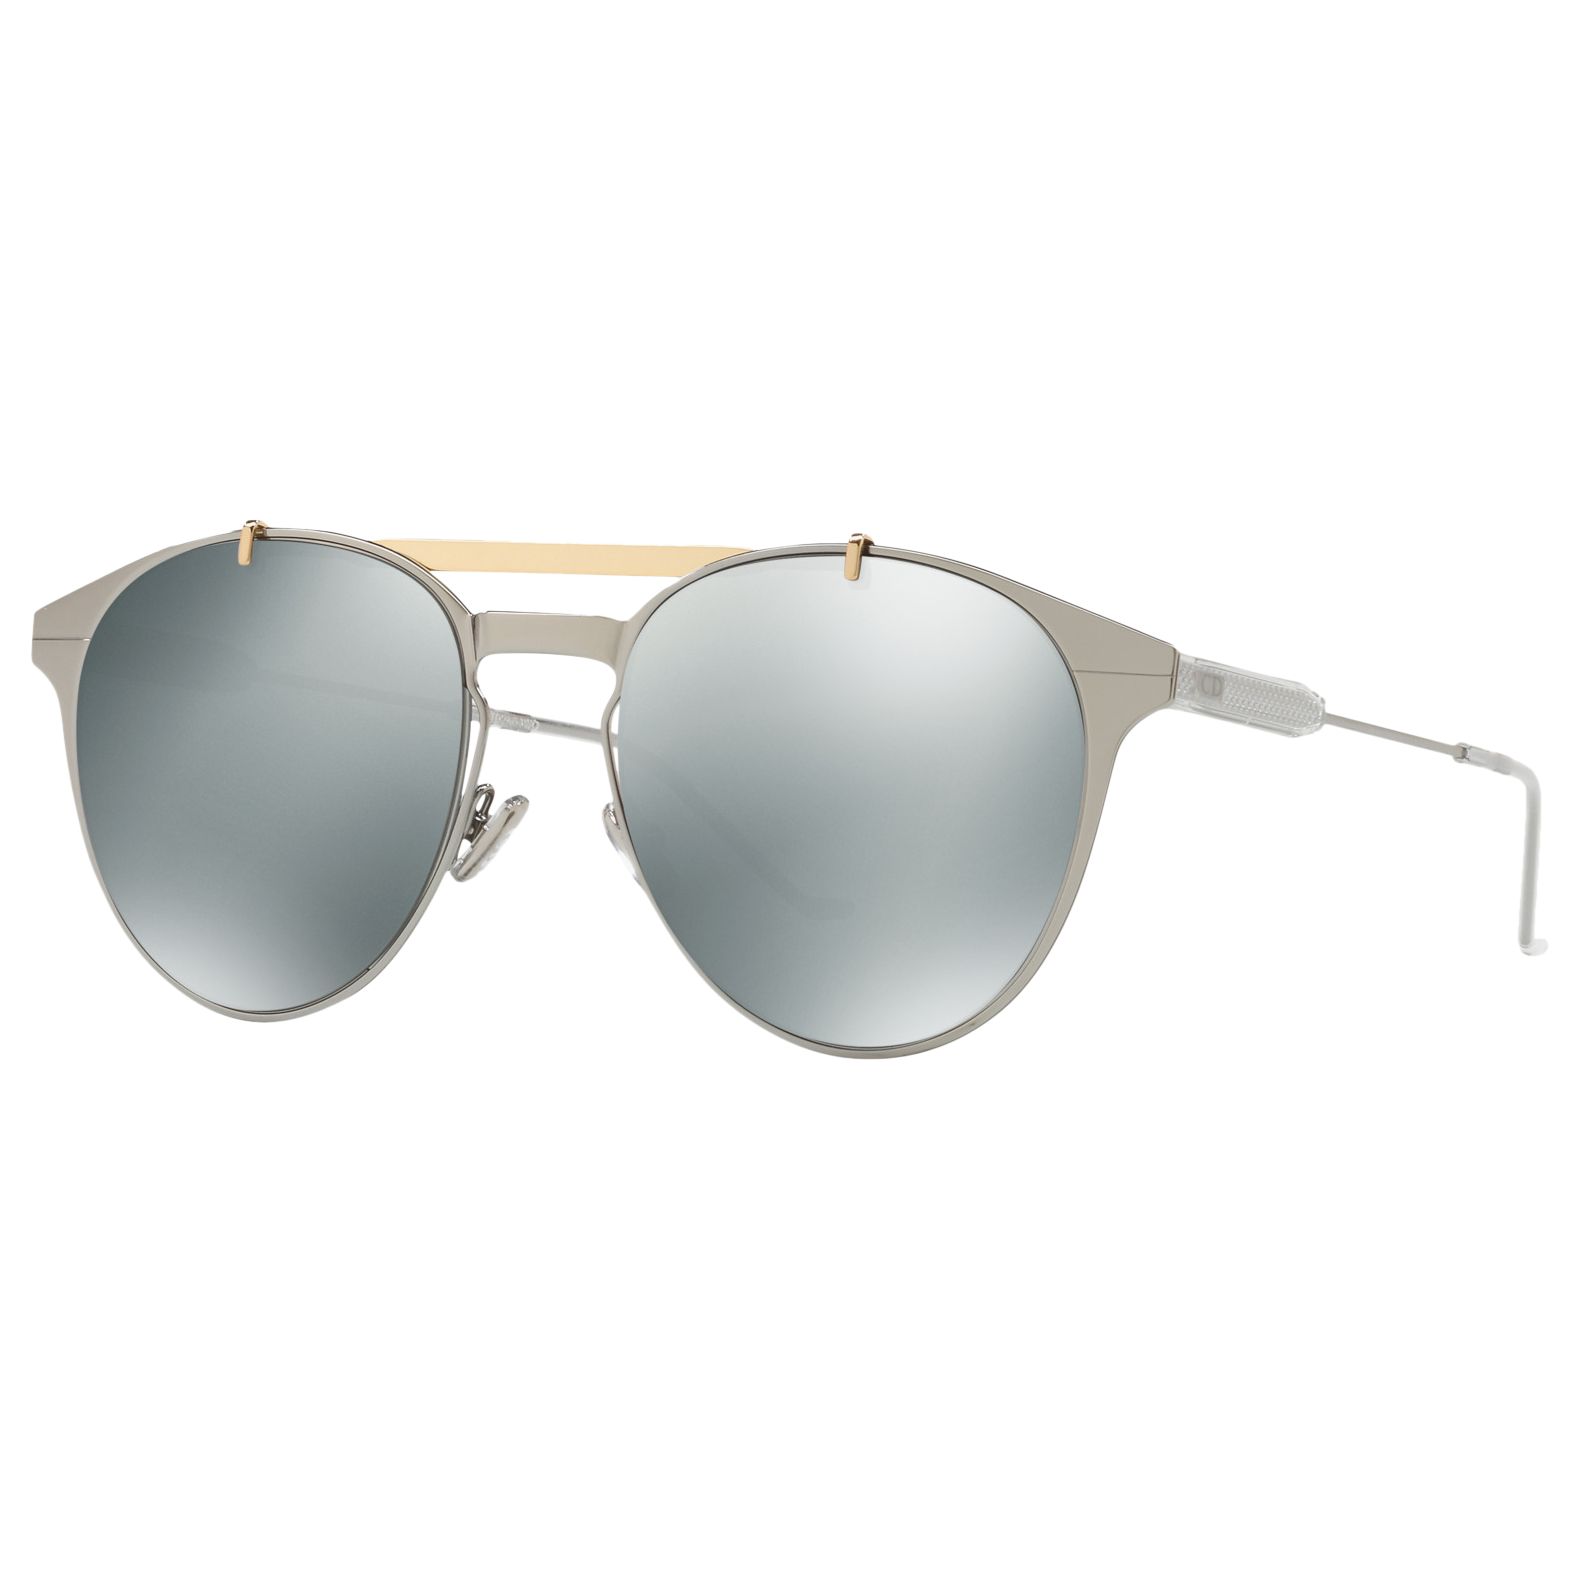 DIOR DIORMotion1 Round Sunglasses, Silver/Mirror Grey